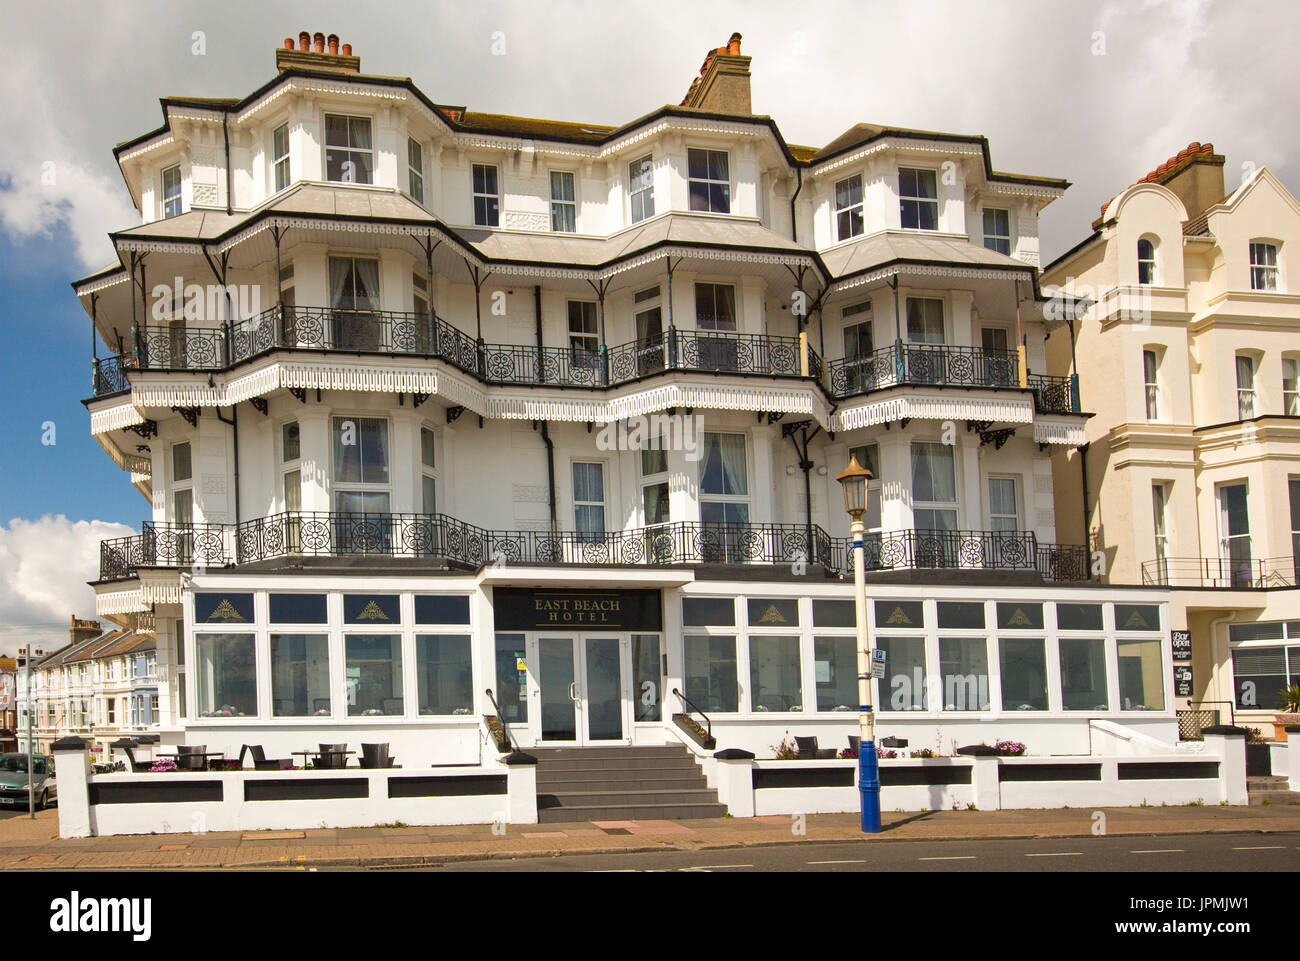 East Beach Hotel in Eastbourne, beliebtes Touristenziel, England Stockfoto